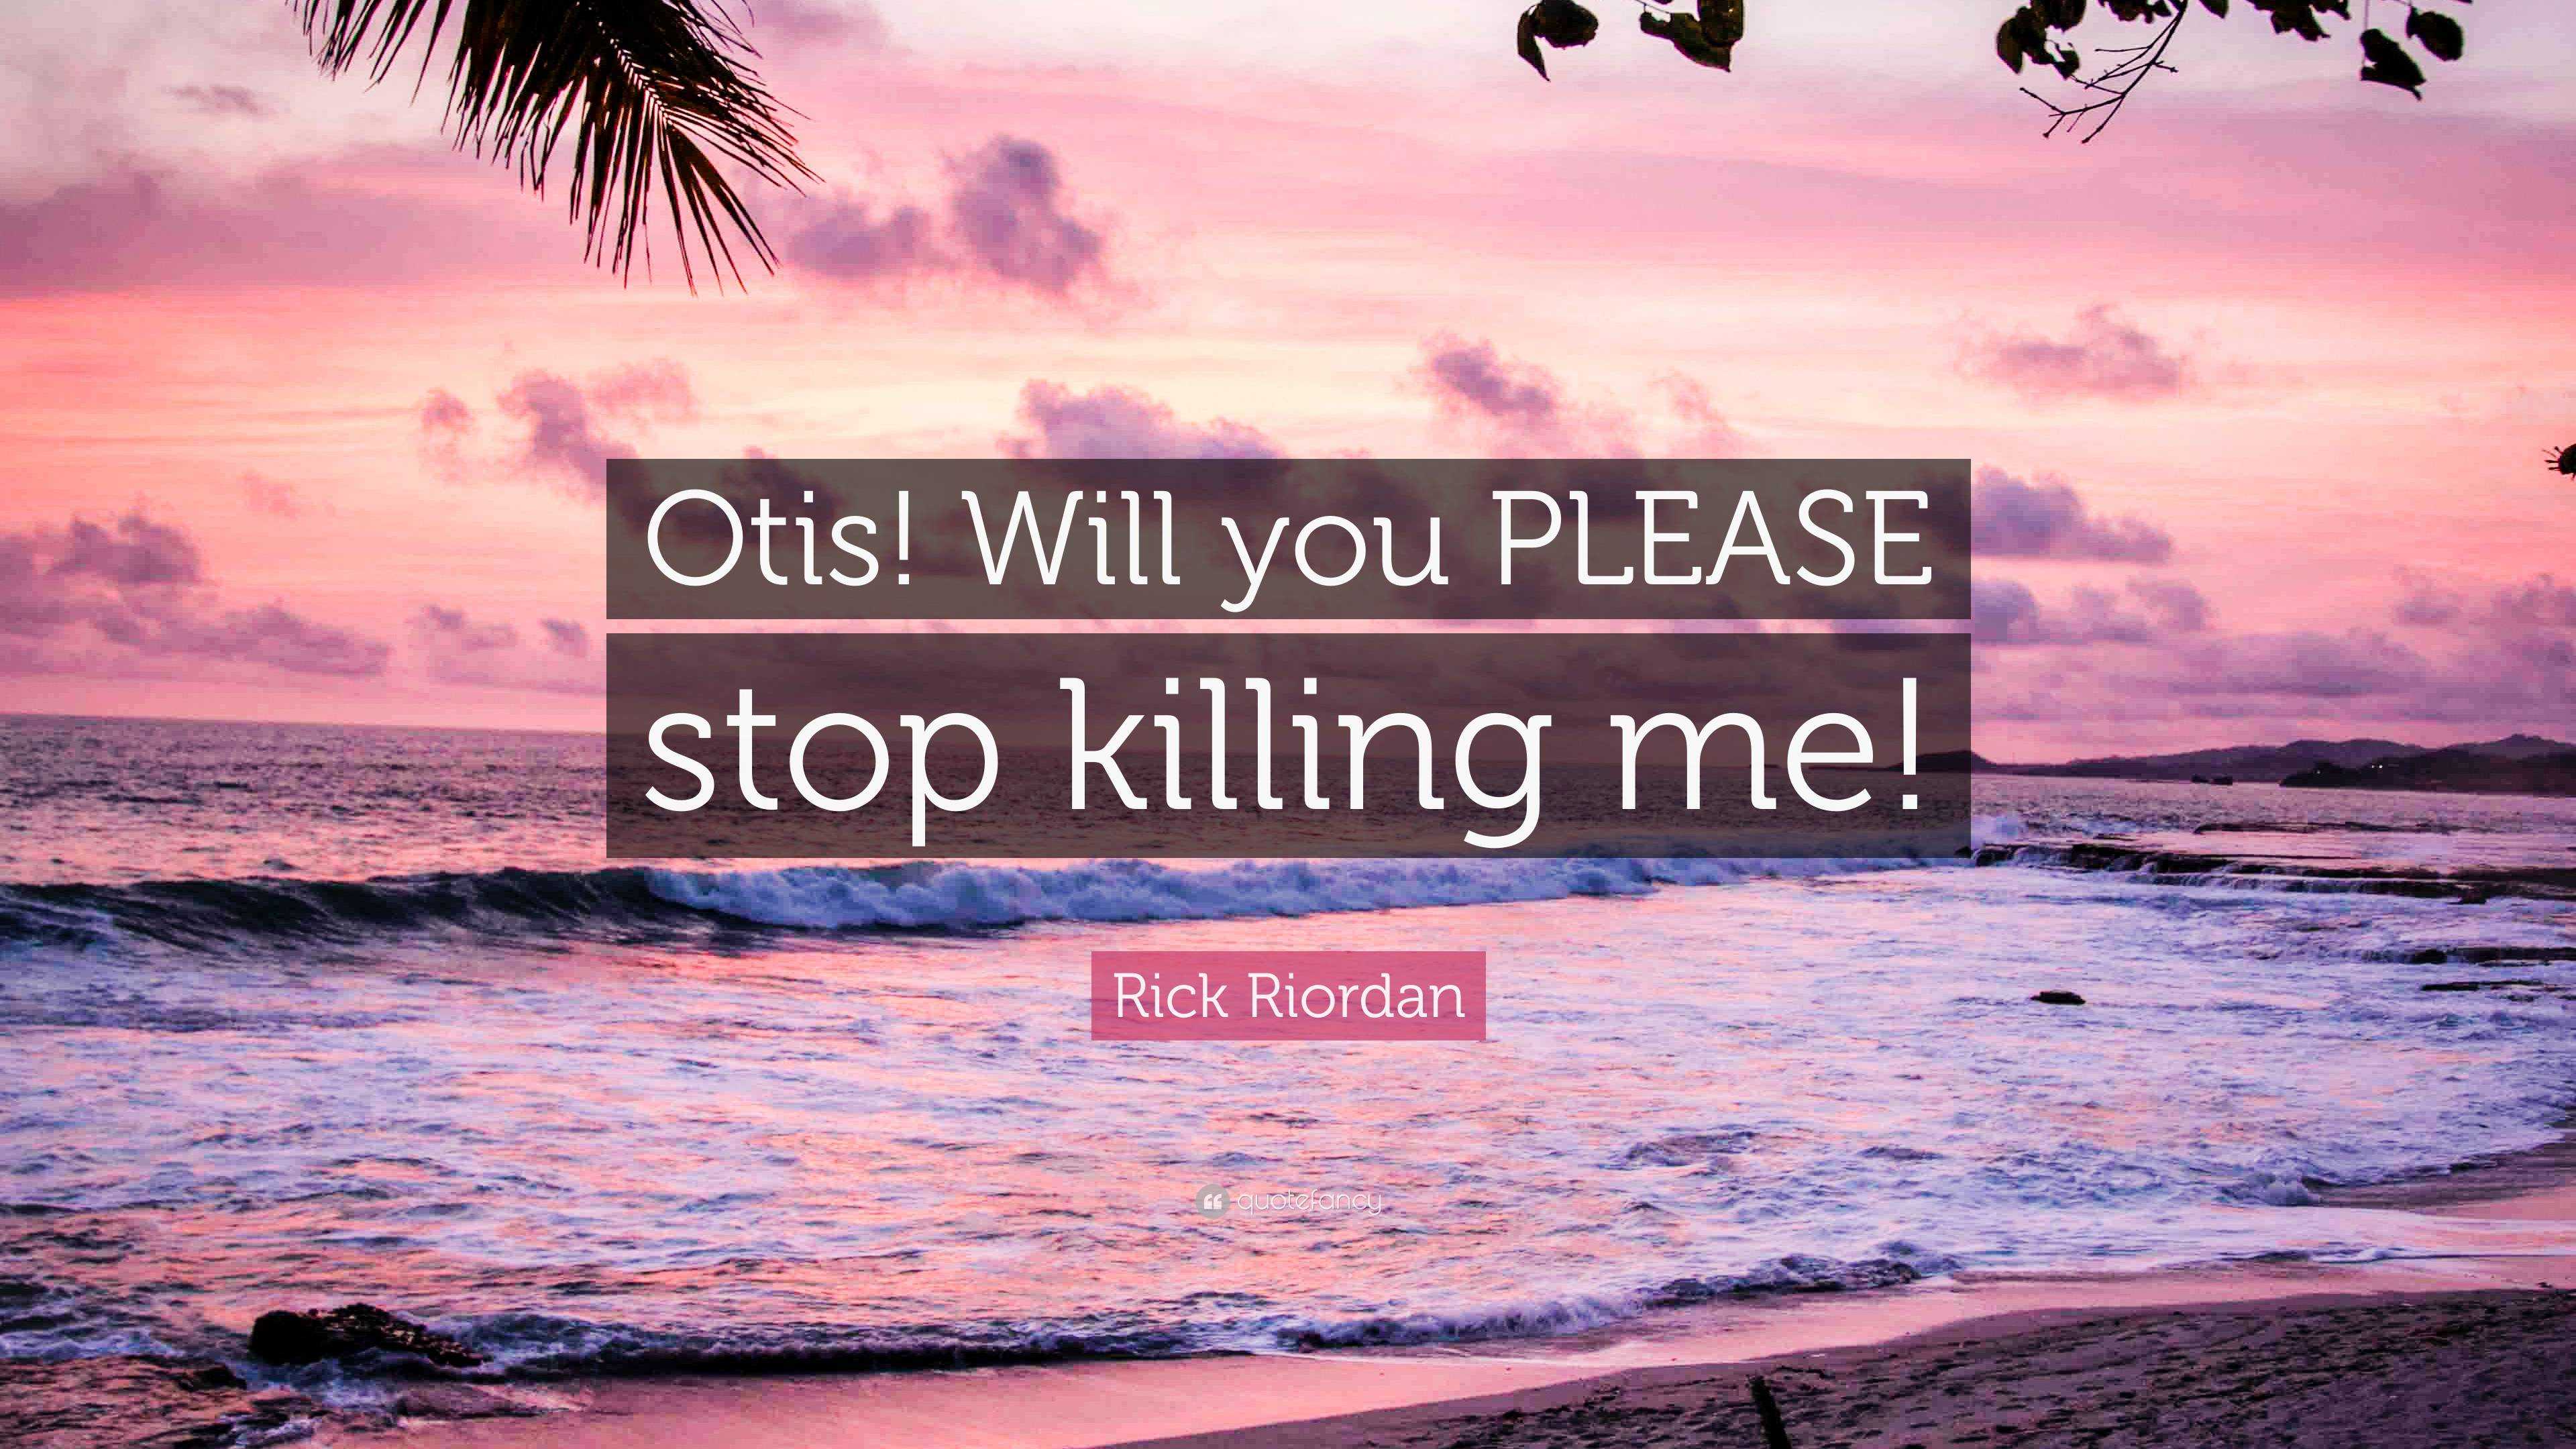 Rick Riordan Quote: “Otis! Will you PLEASE stop killing me!”